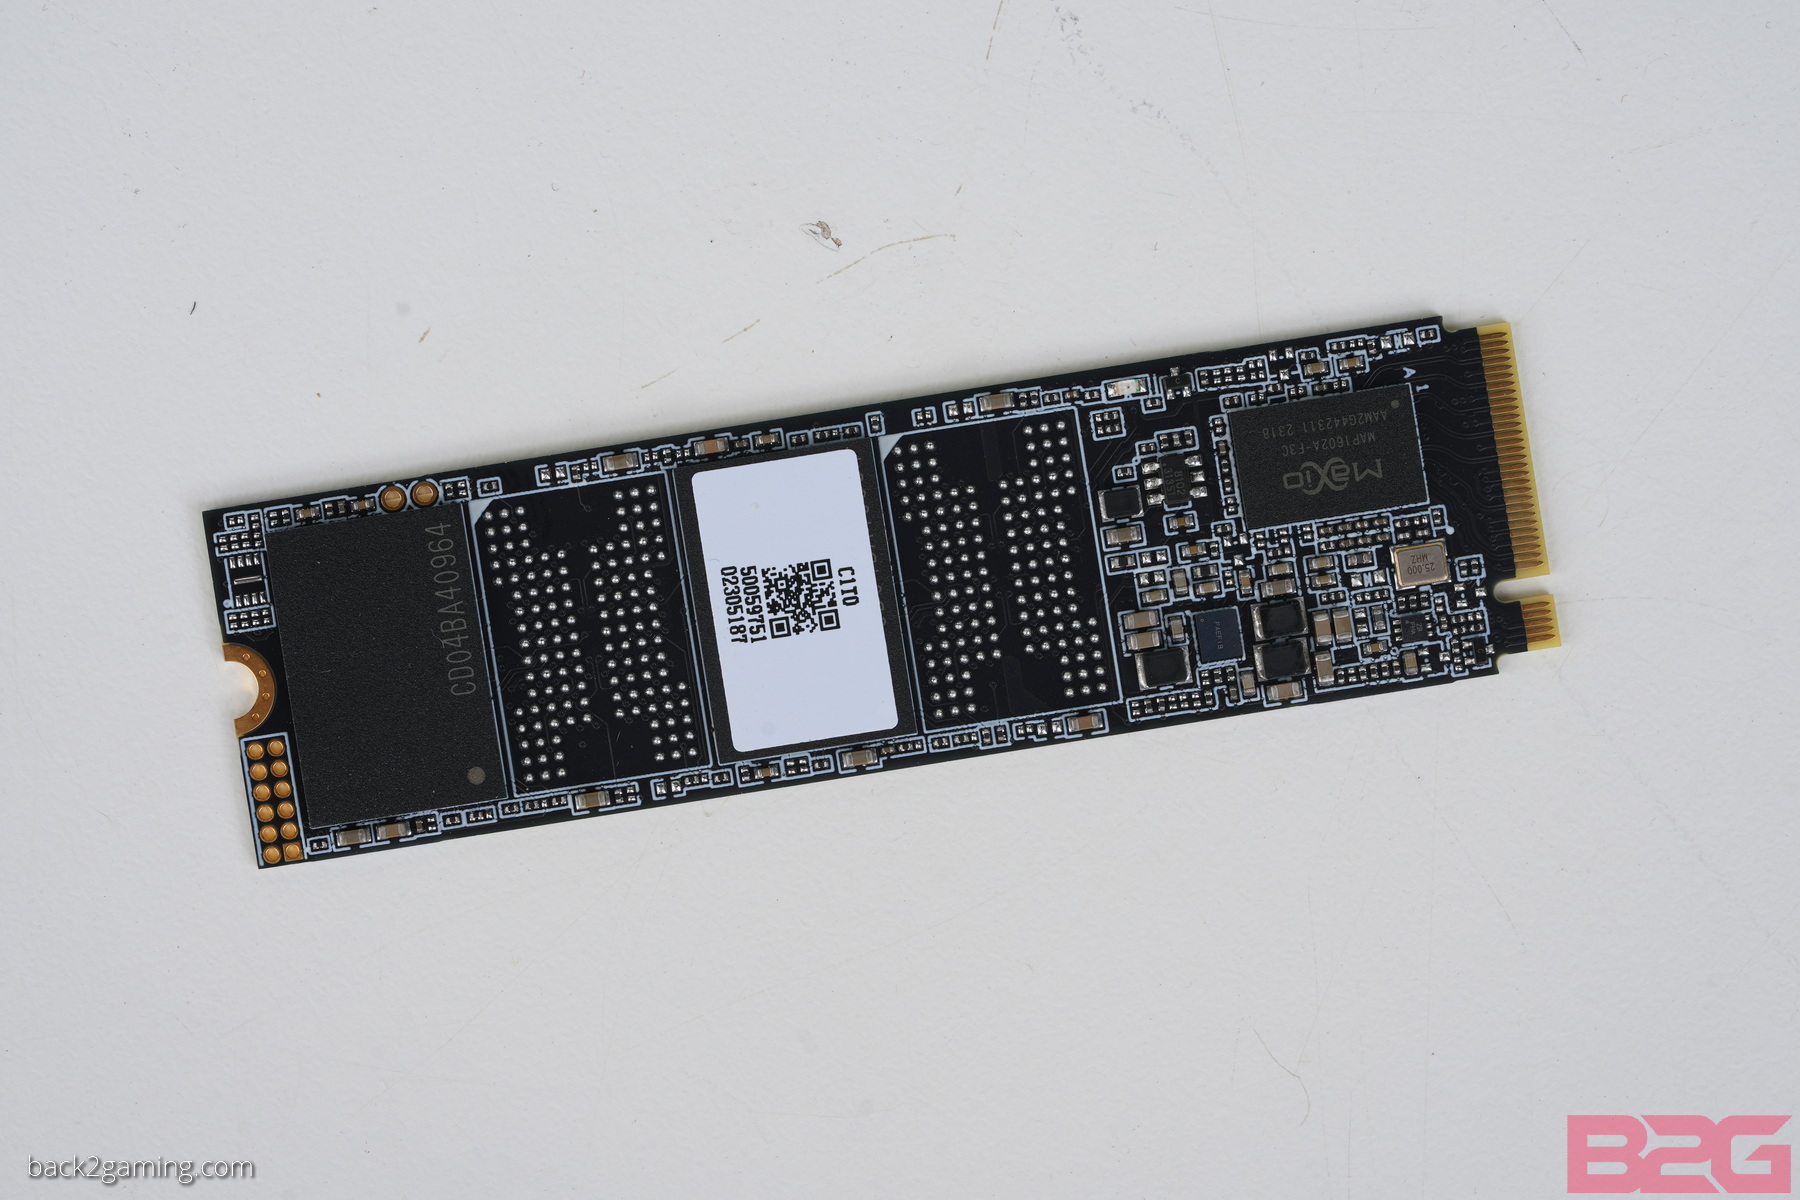 Netac NV7000-t Gen4 NVMe M.2 SSD Review - NV7000-t